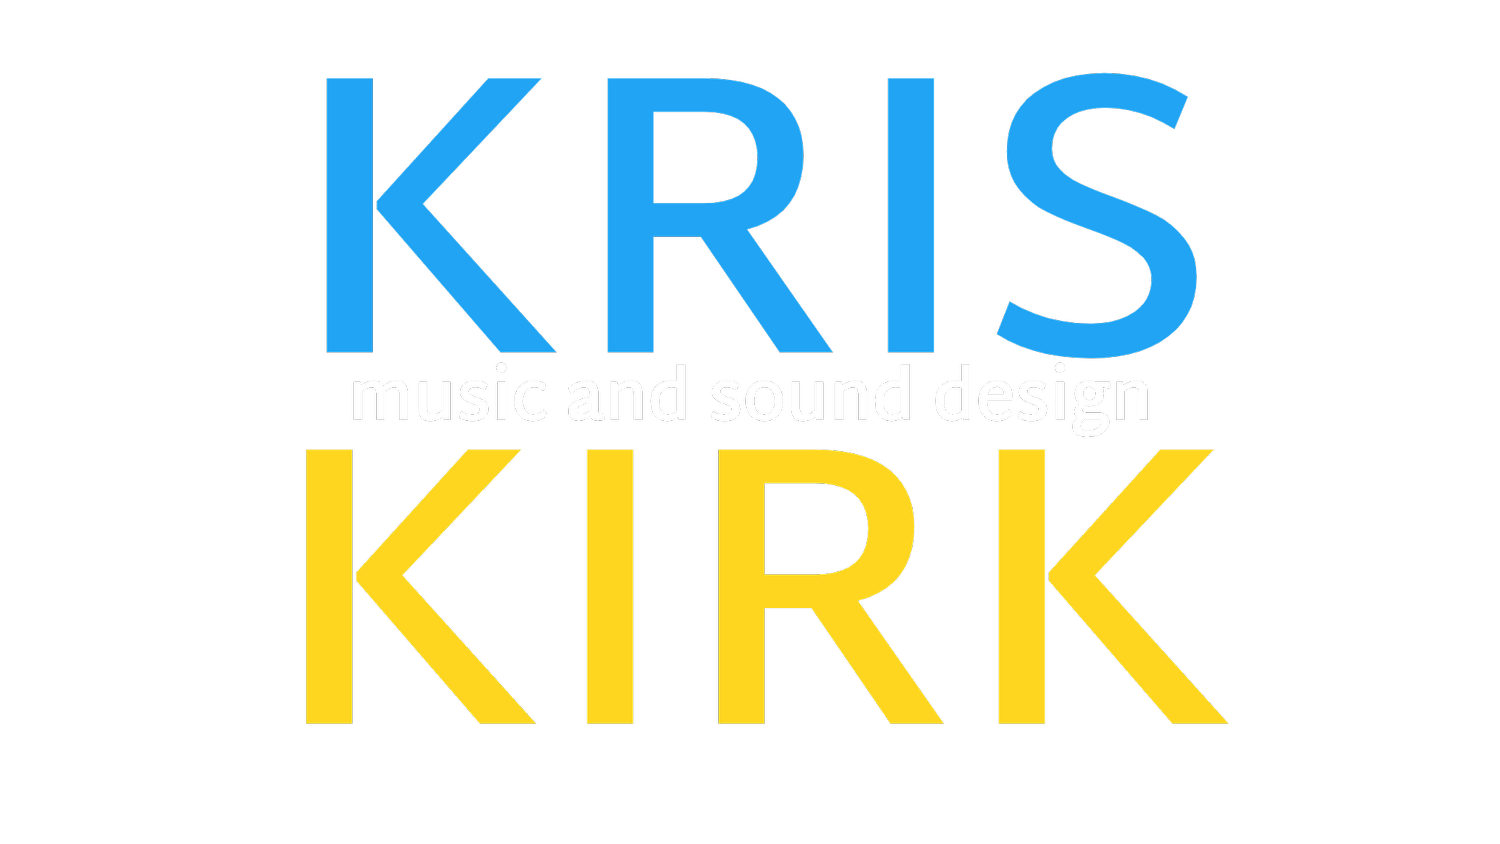 Kris Kirk | music and sound design